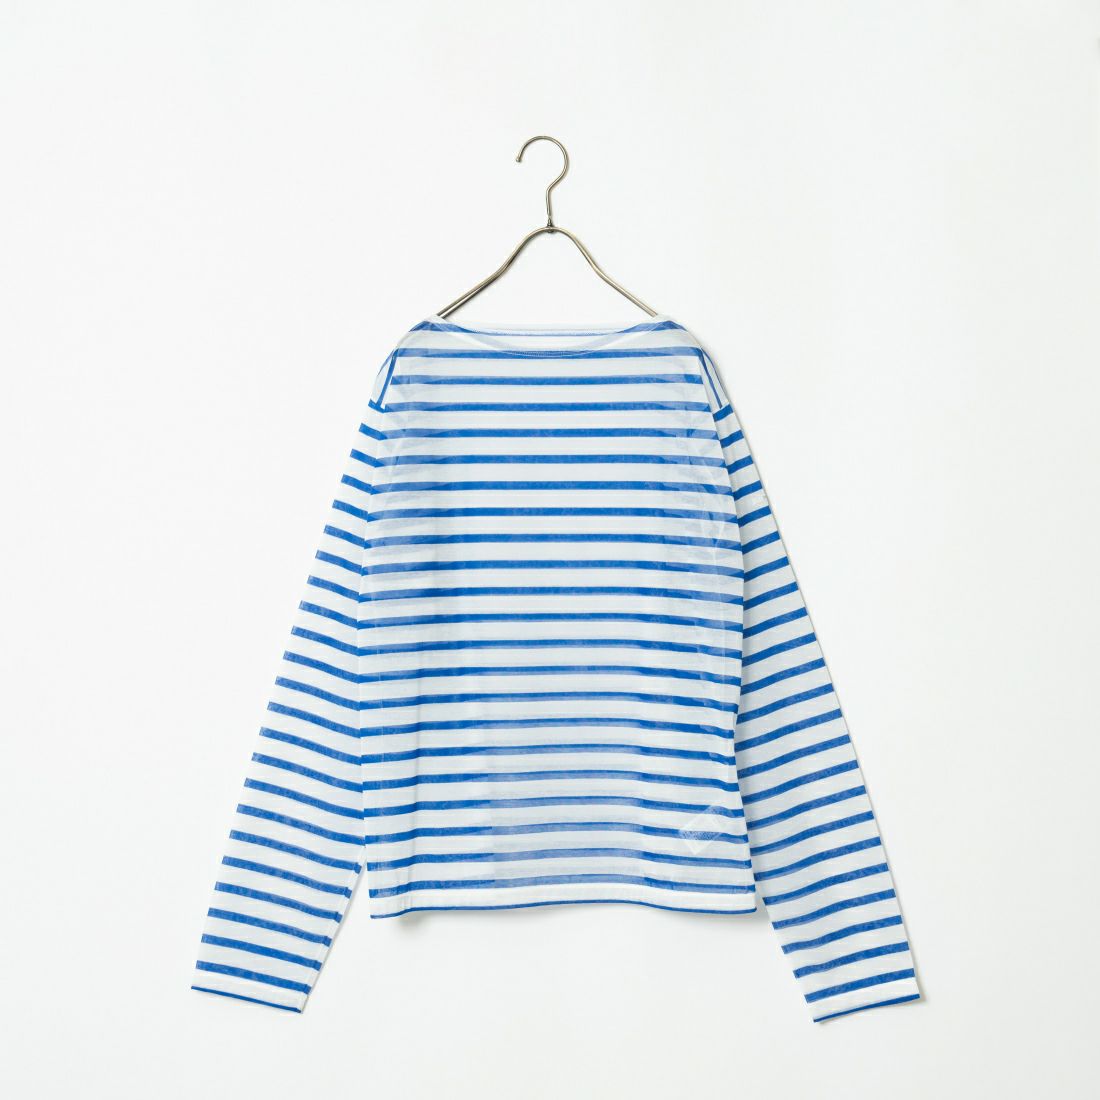 ORCIVAL [オーシバル] ボートネック ロングスリーブTシャツ [OR-C0350STJ] WHITE/BLUE